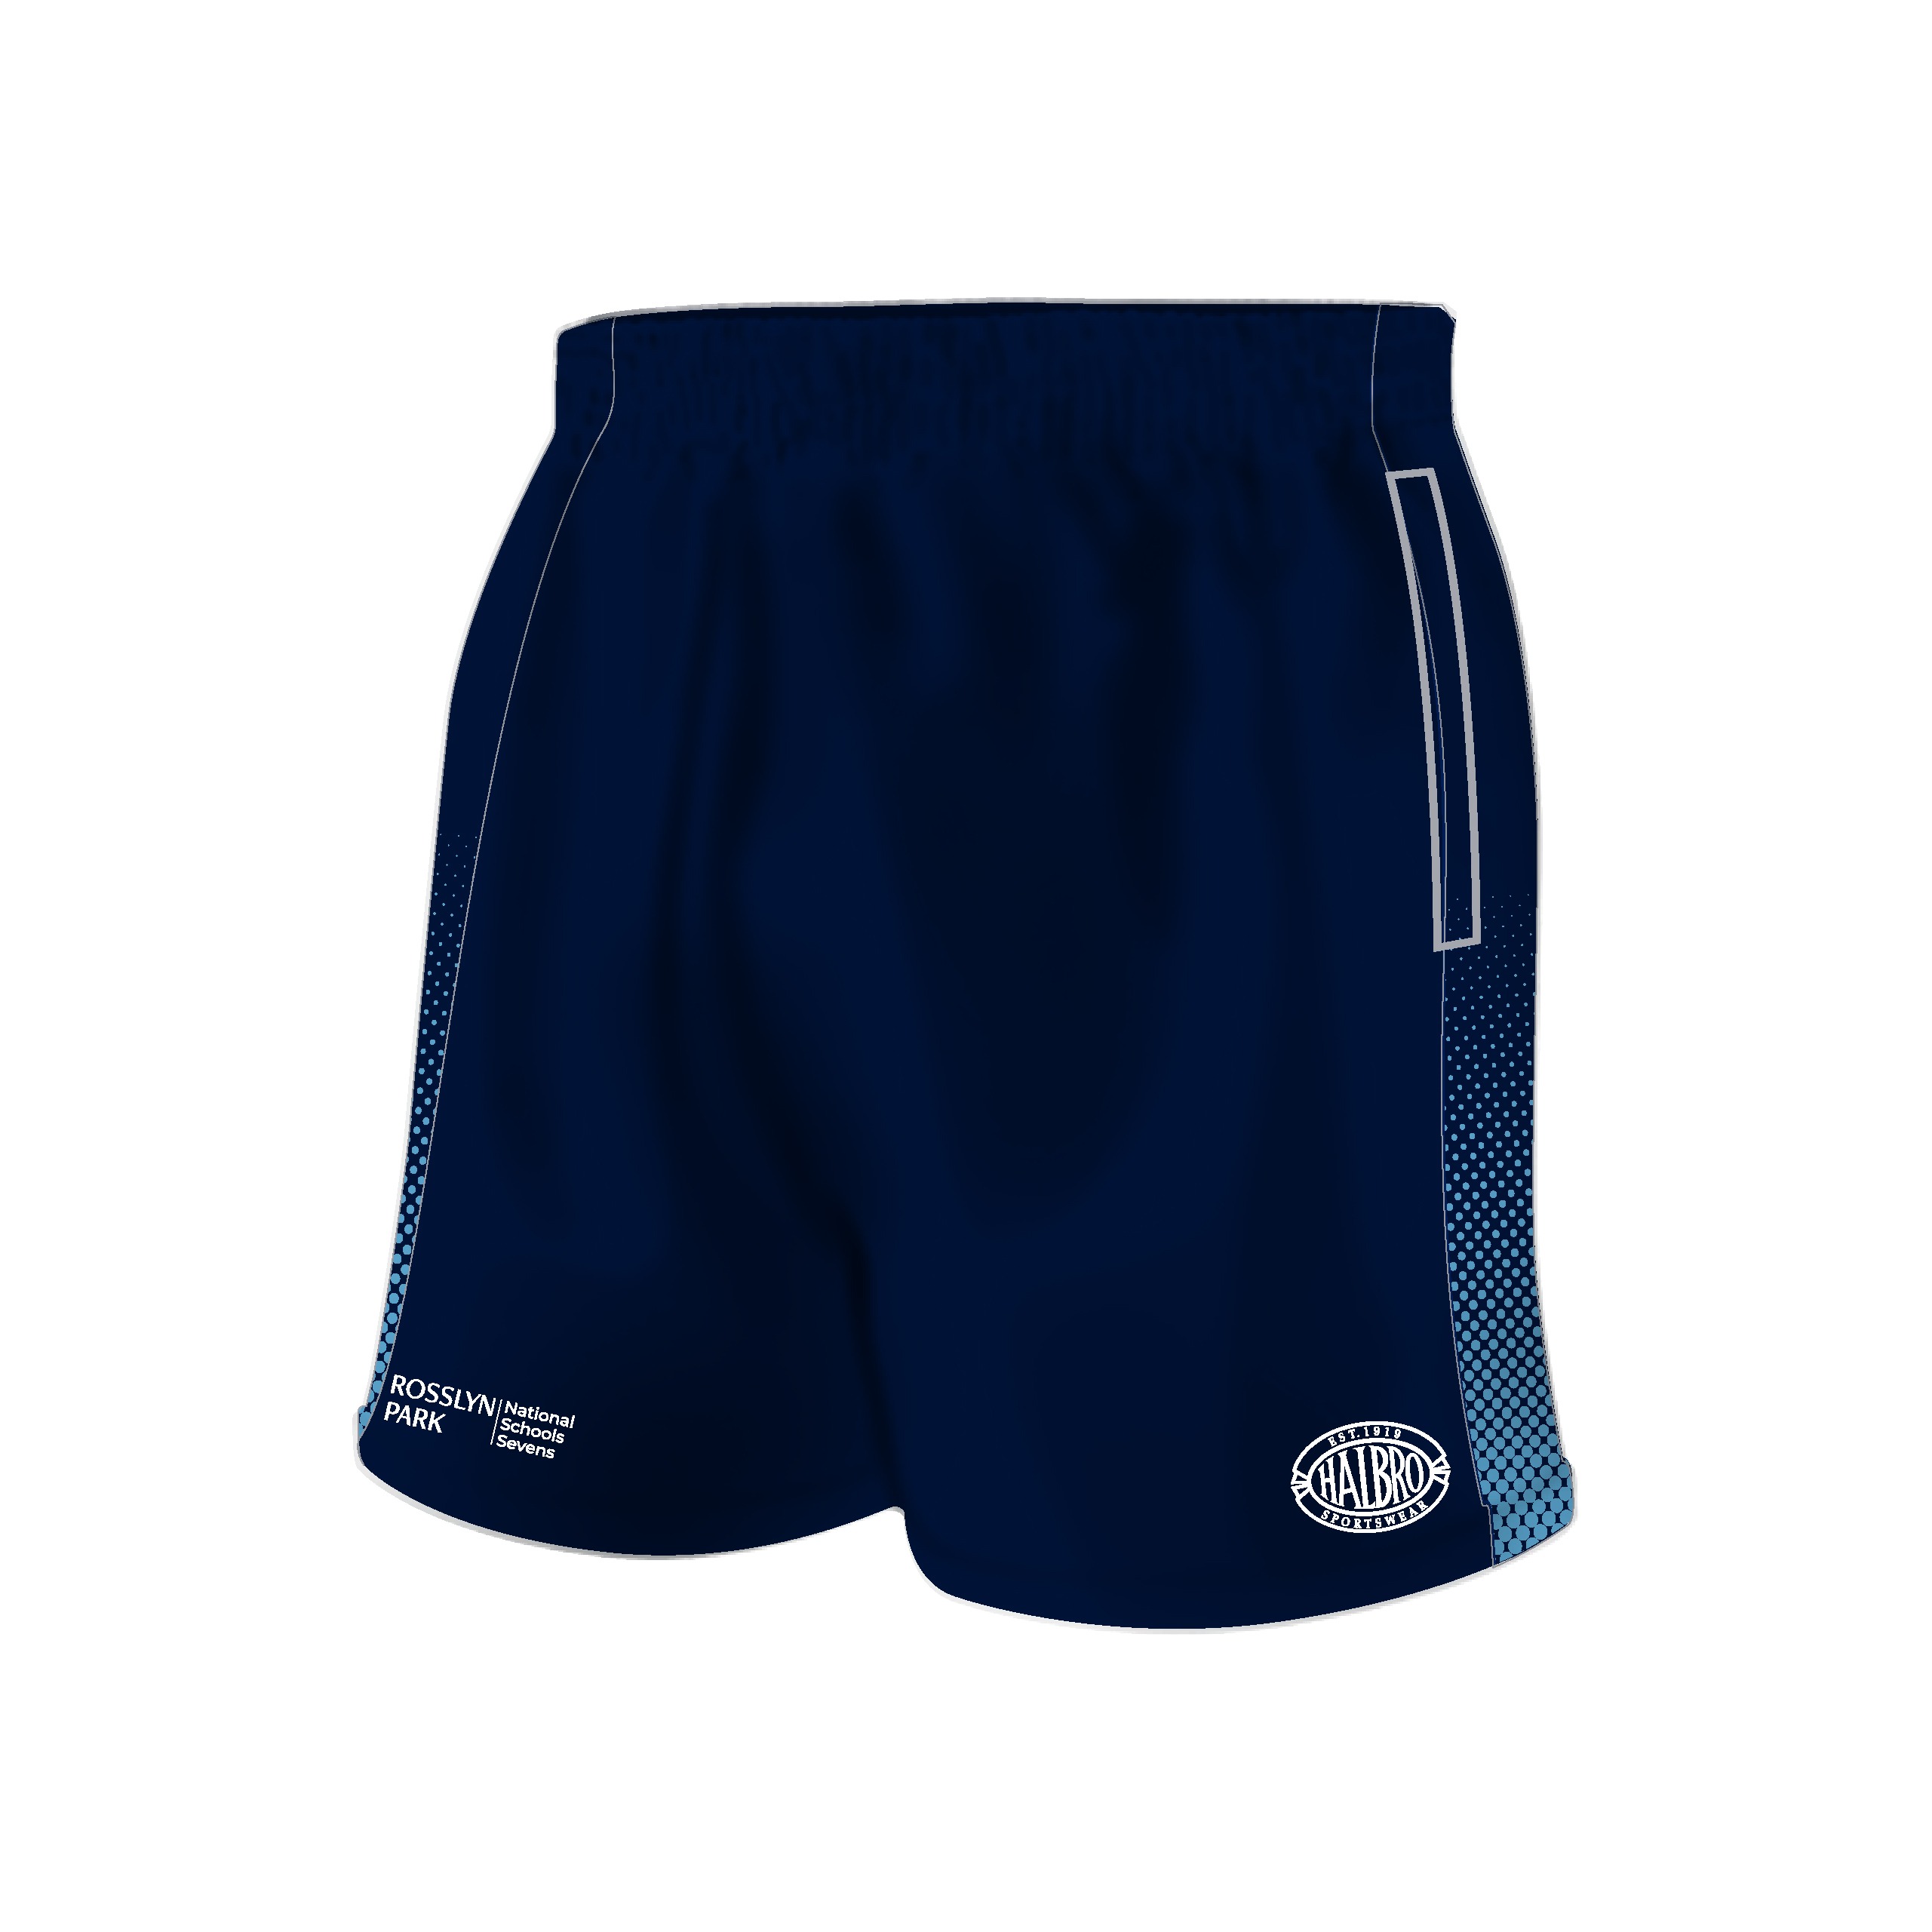 Rosslyn Park National Schools 7s Cratus Shorts - Halbro Sportswear Limited